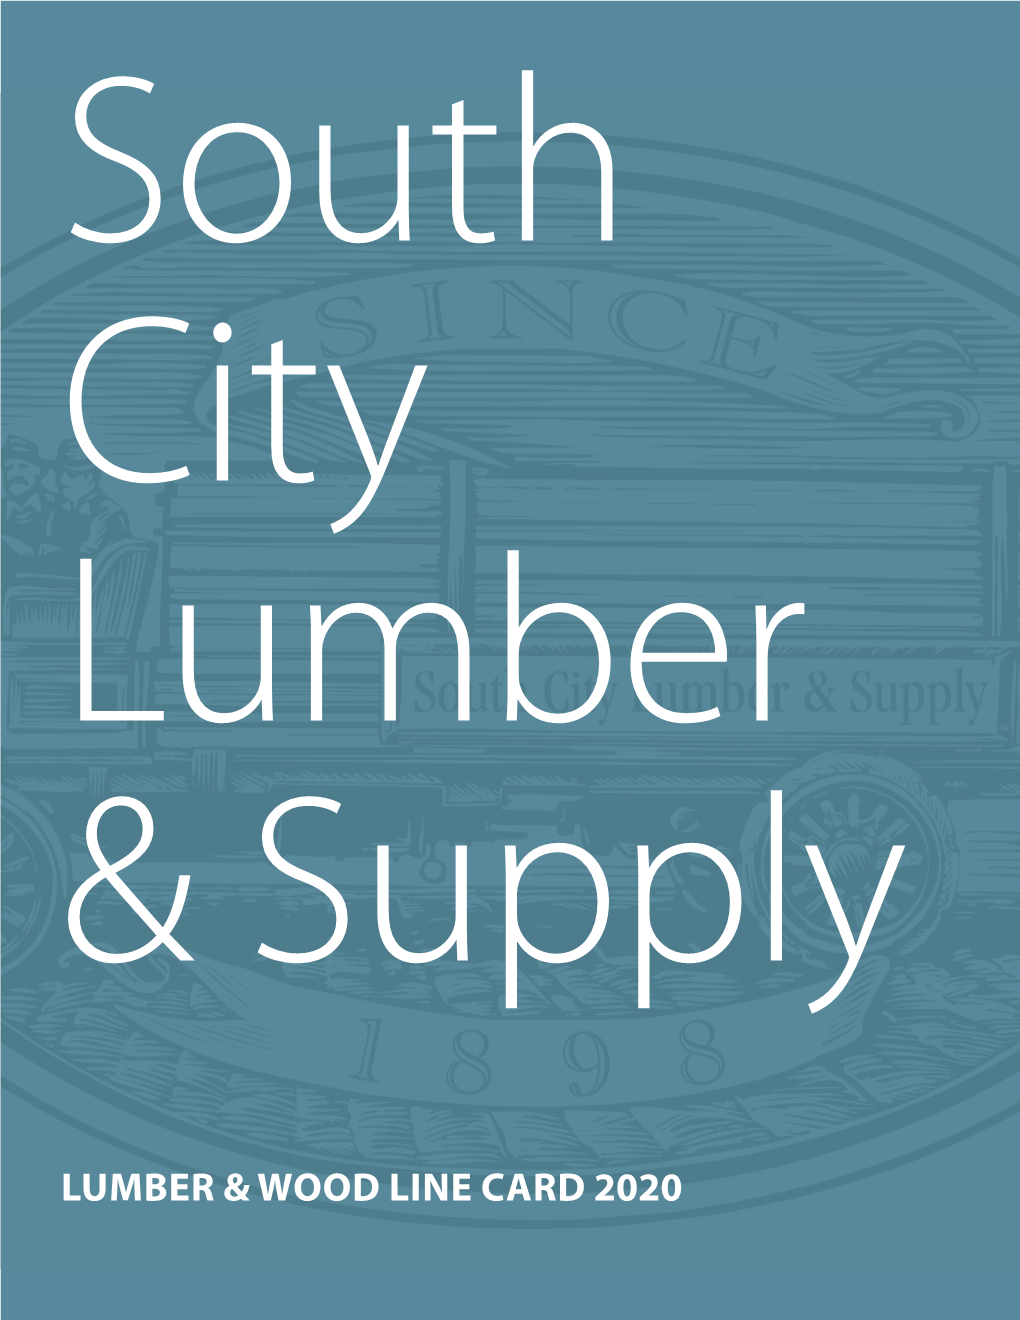 Lumber & Wood Line Card 2020